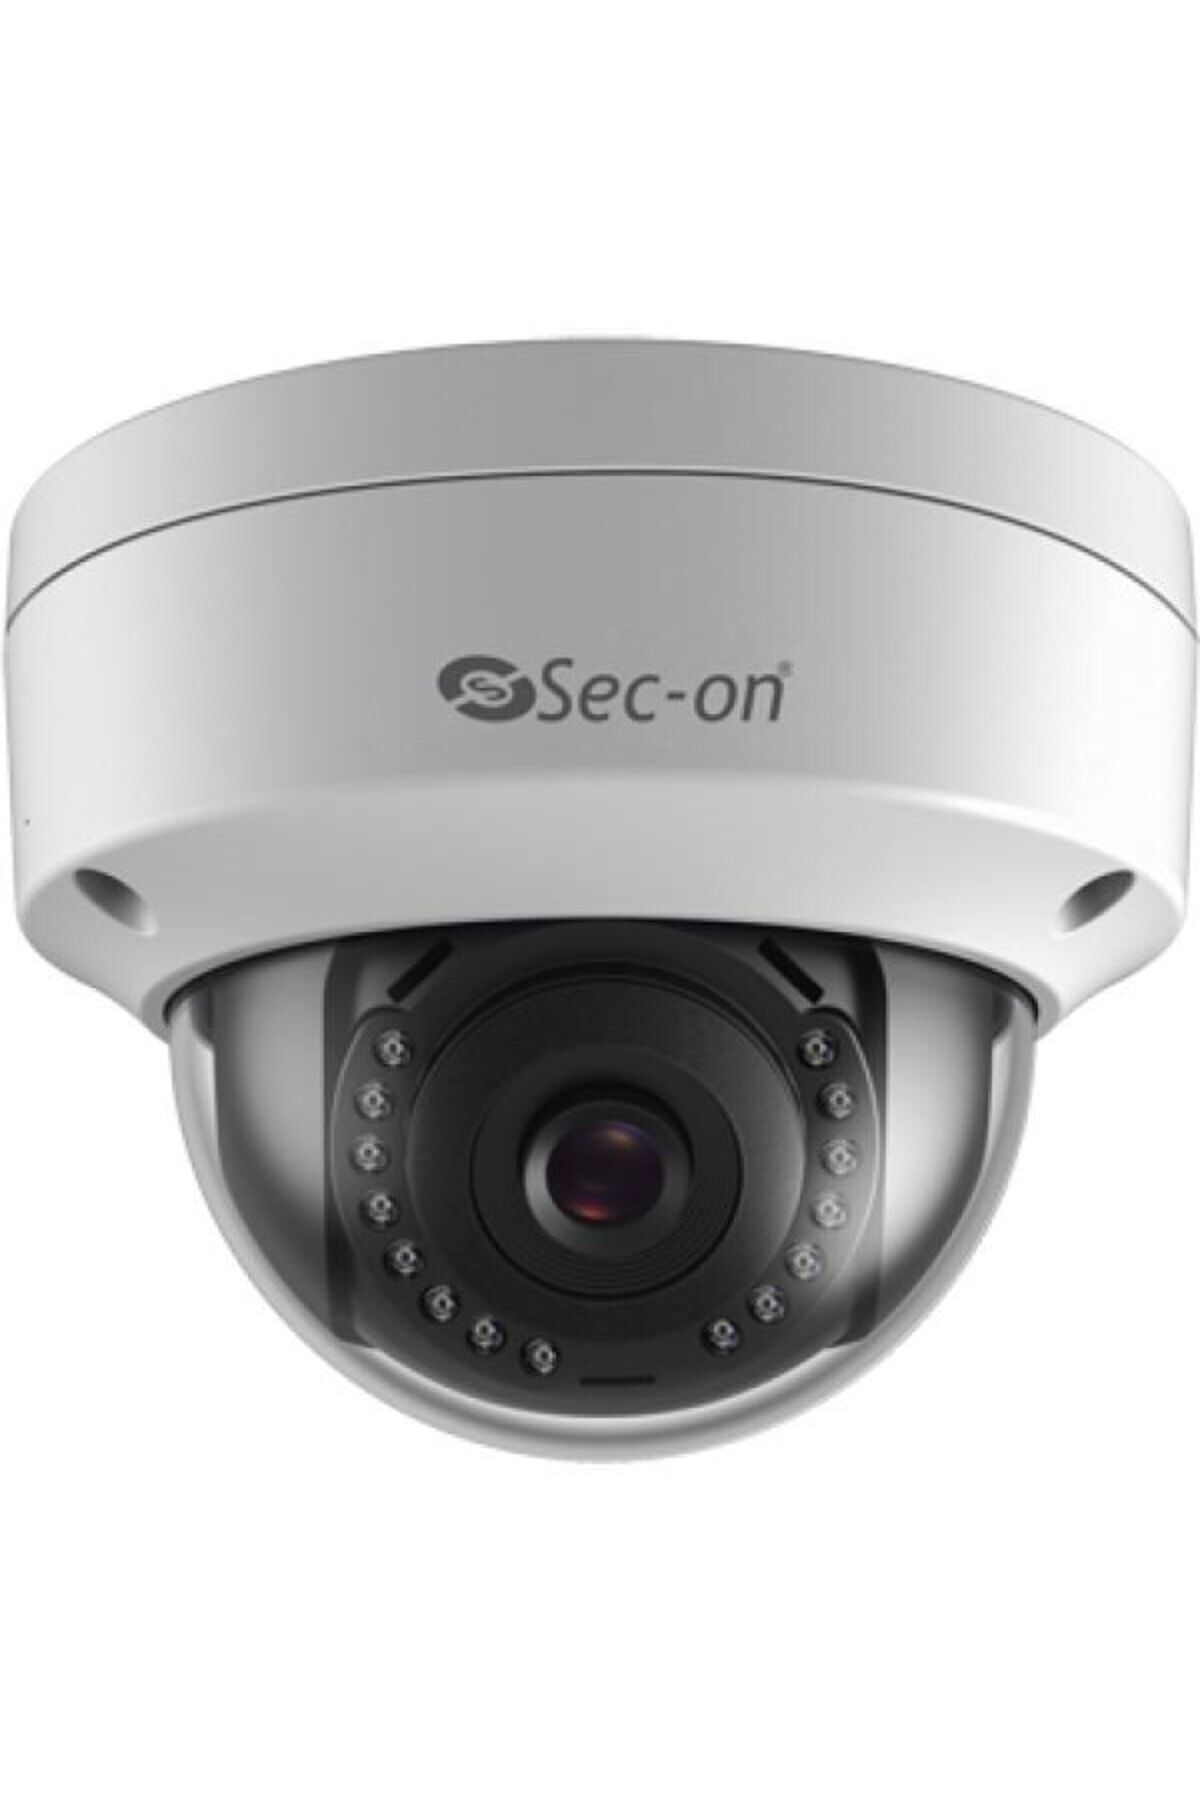 Sec on SEC-ON SC-DF2302-S 2MP IP Dome Network Güvenlik Kamerası